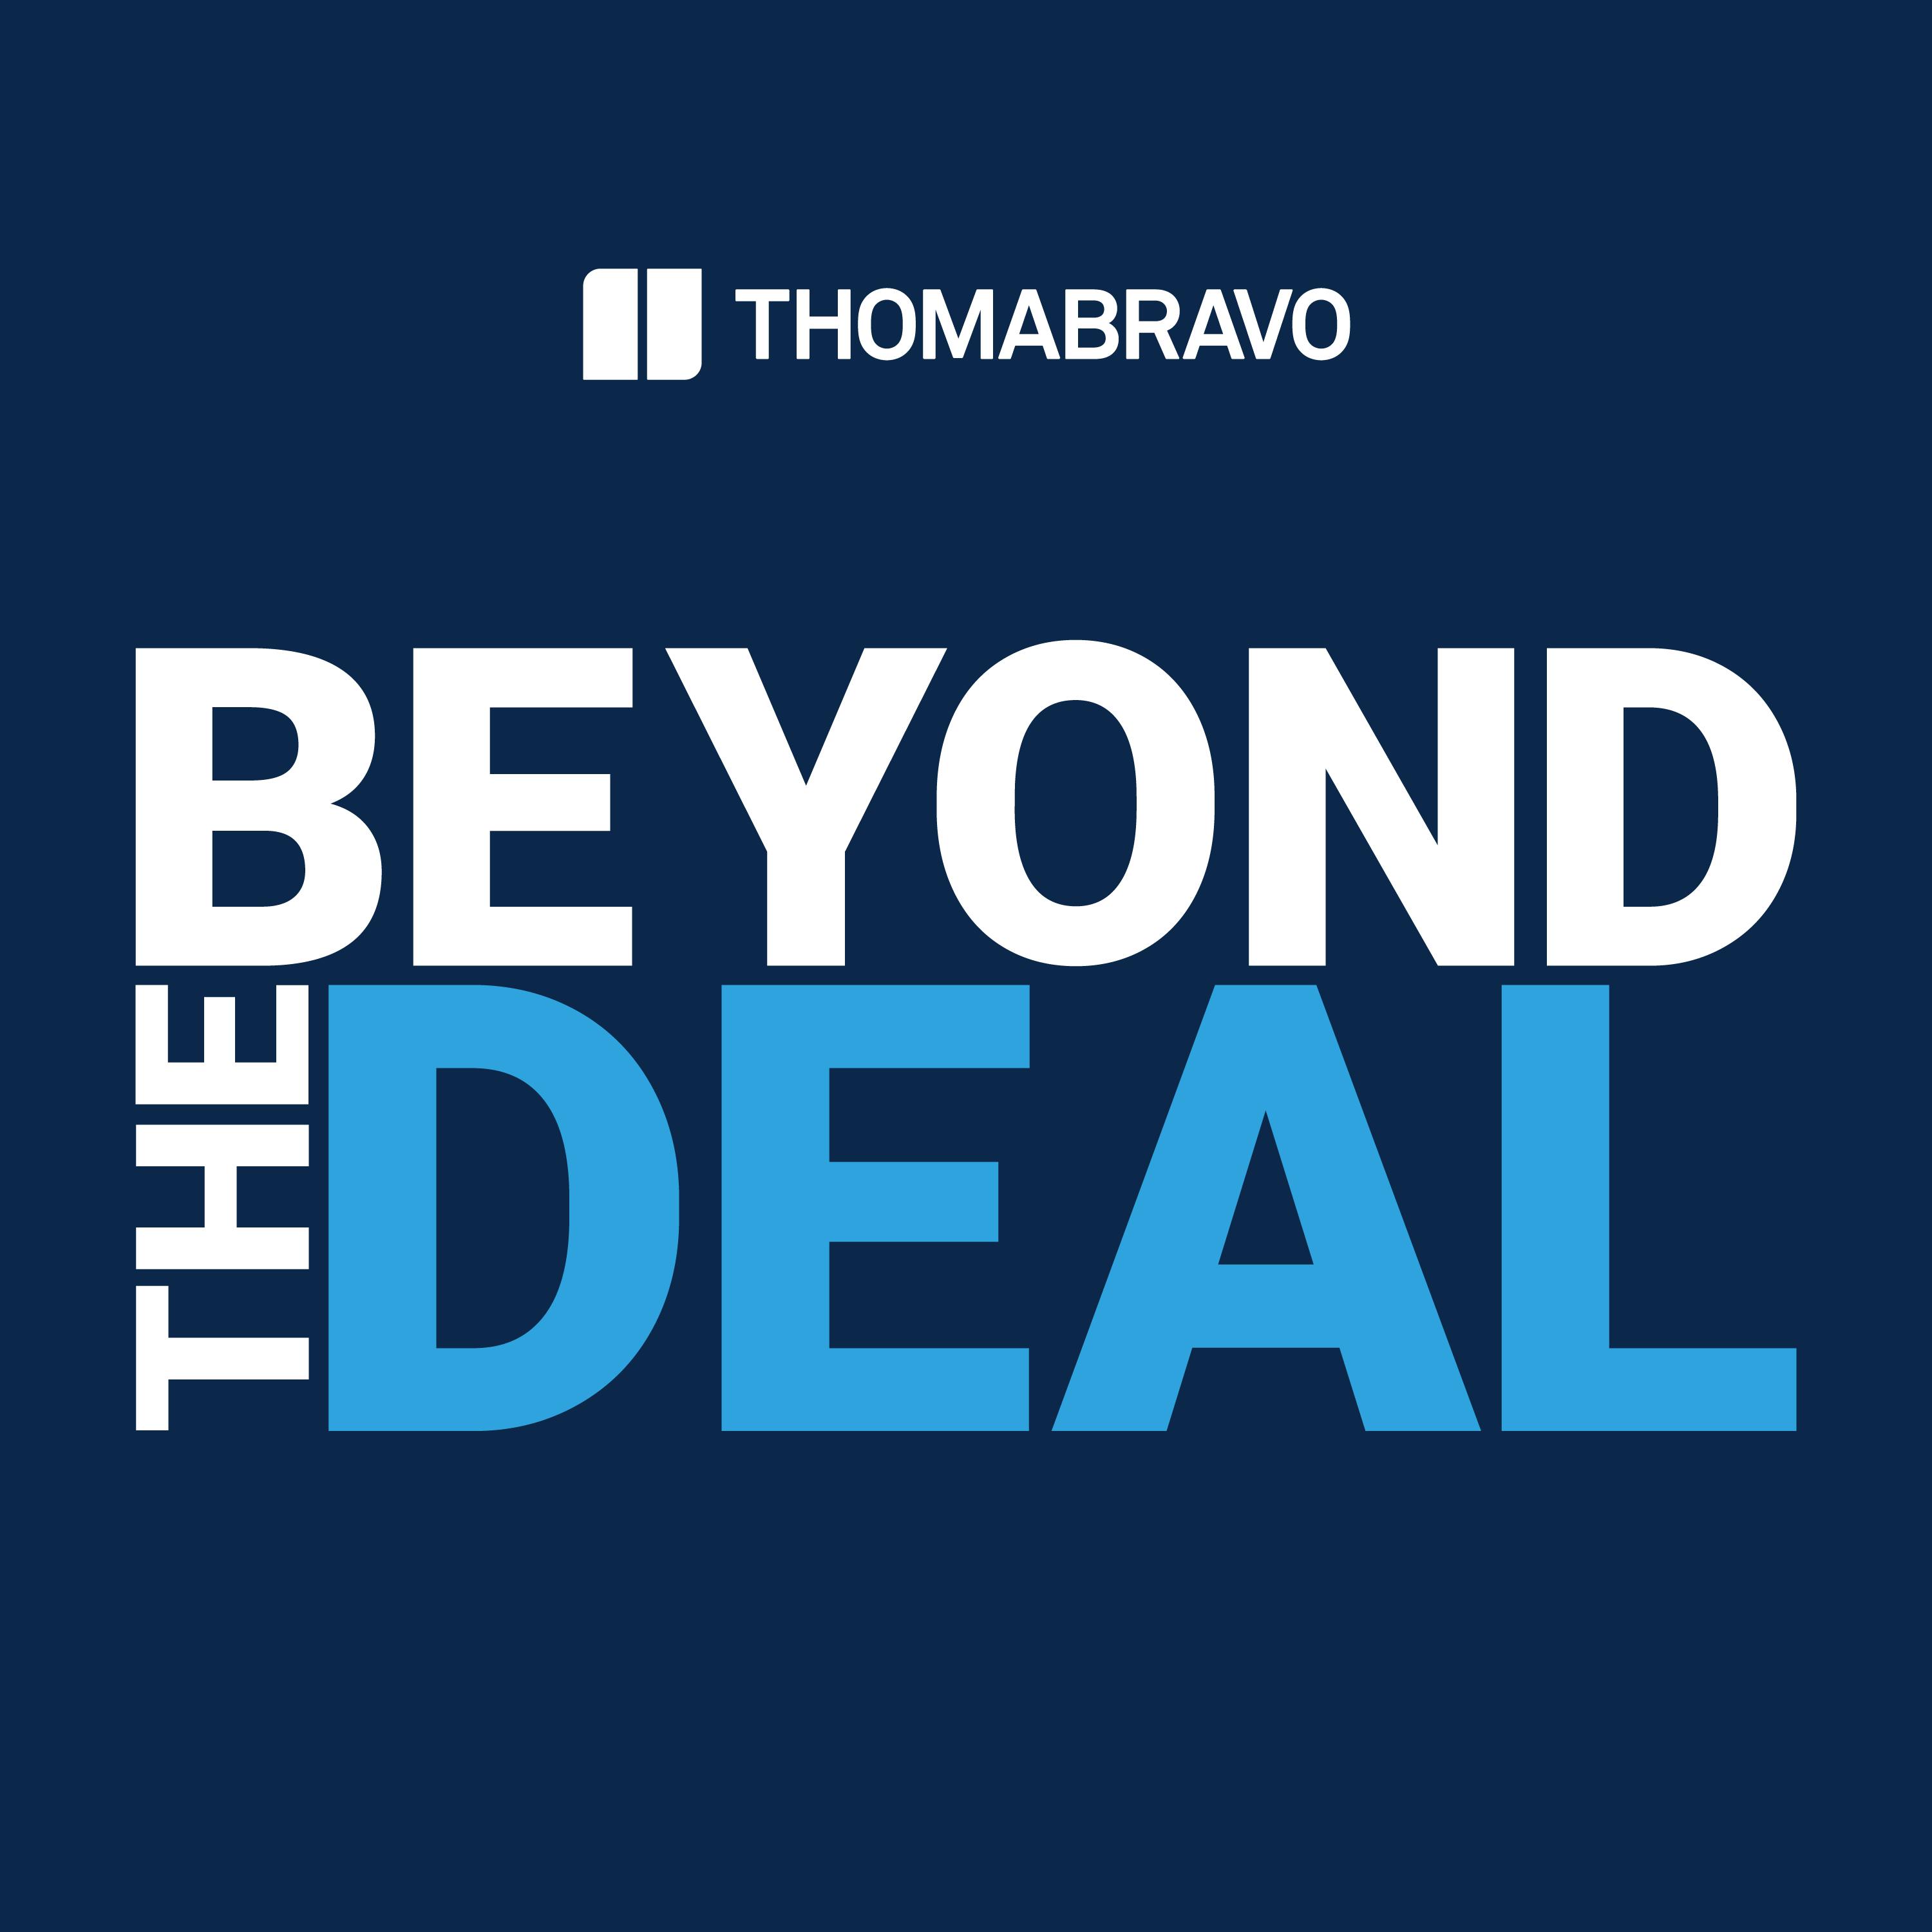 Beyond the Partnership Between Carl Thoma and Orlando Bravo by Thoma Bravo | Pod People